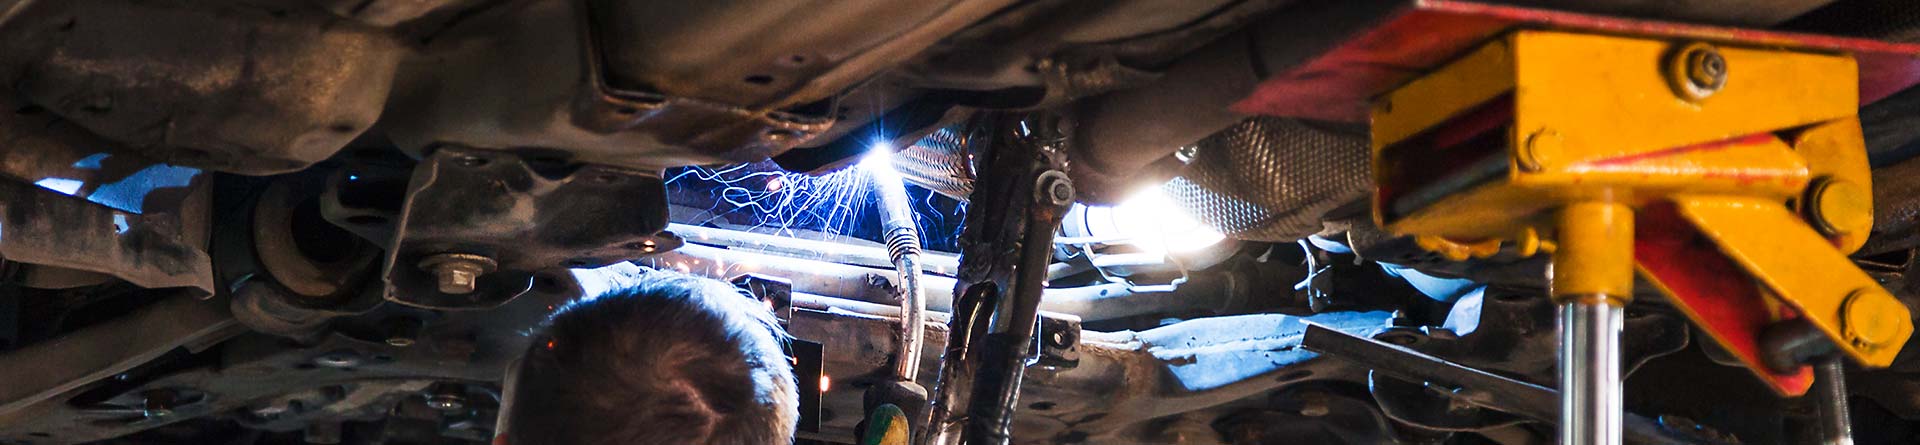 A mechanic welding a part on the underside of a car.